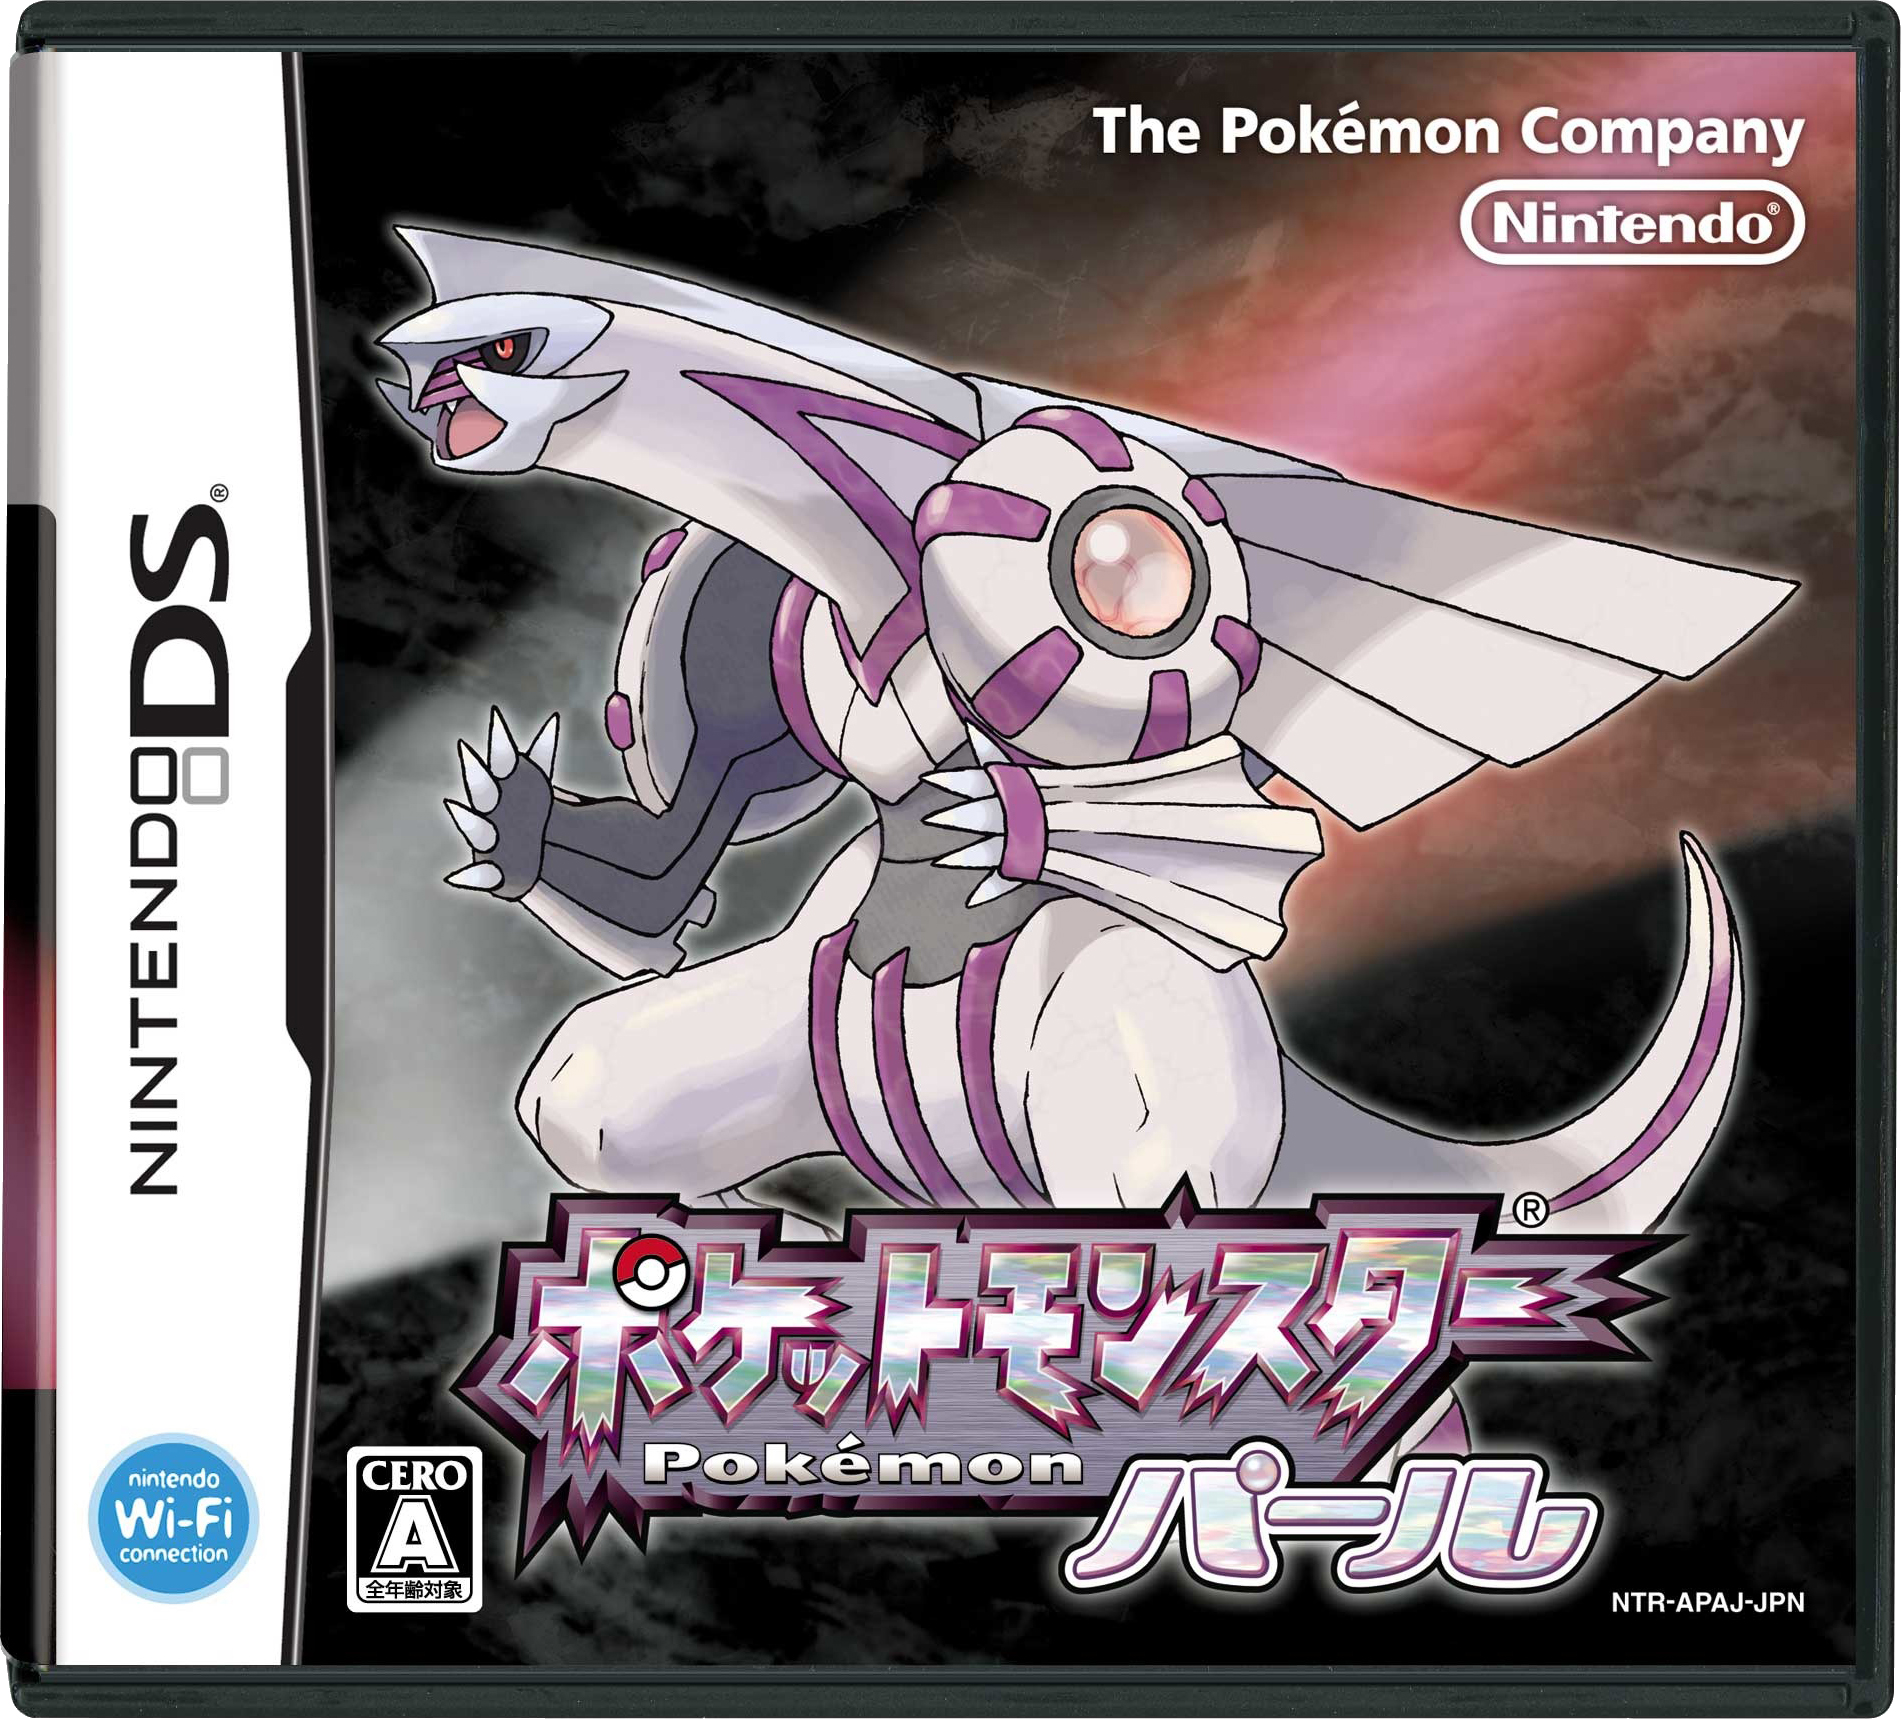 Nintendo DS JP - Pokémon Pearl Version.jpg